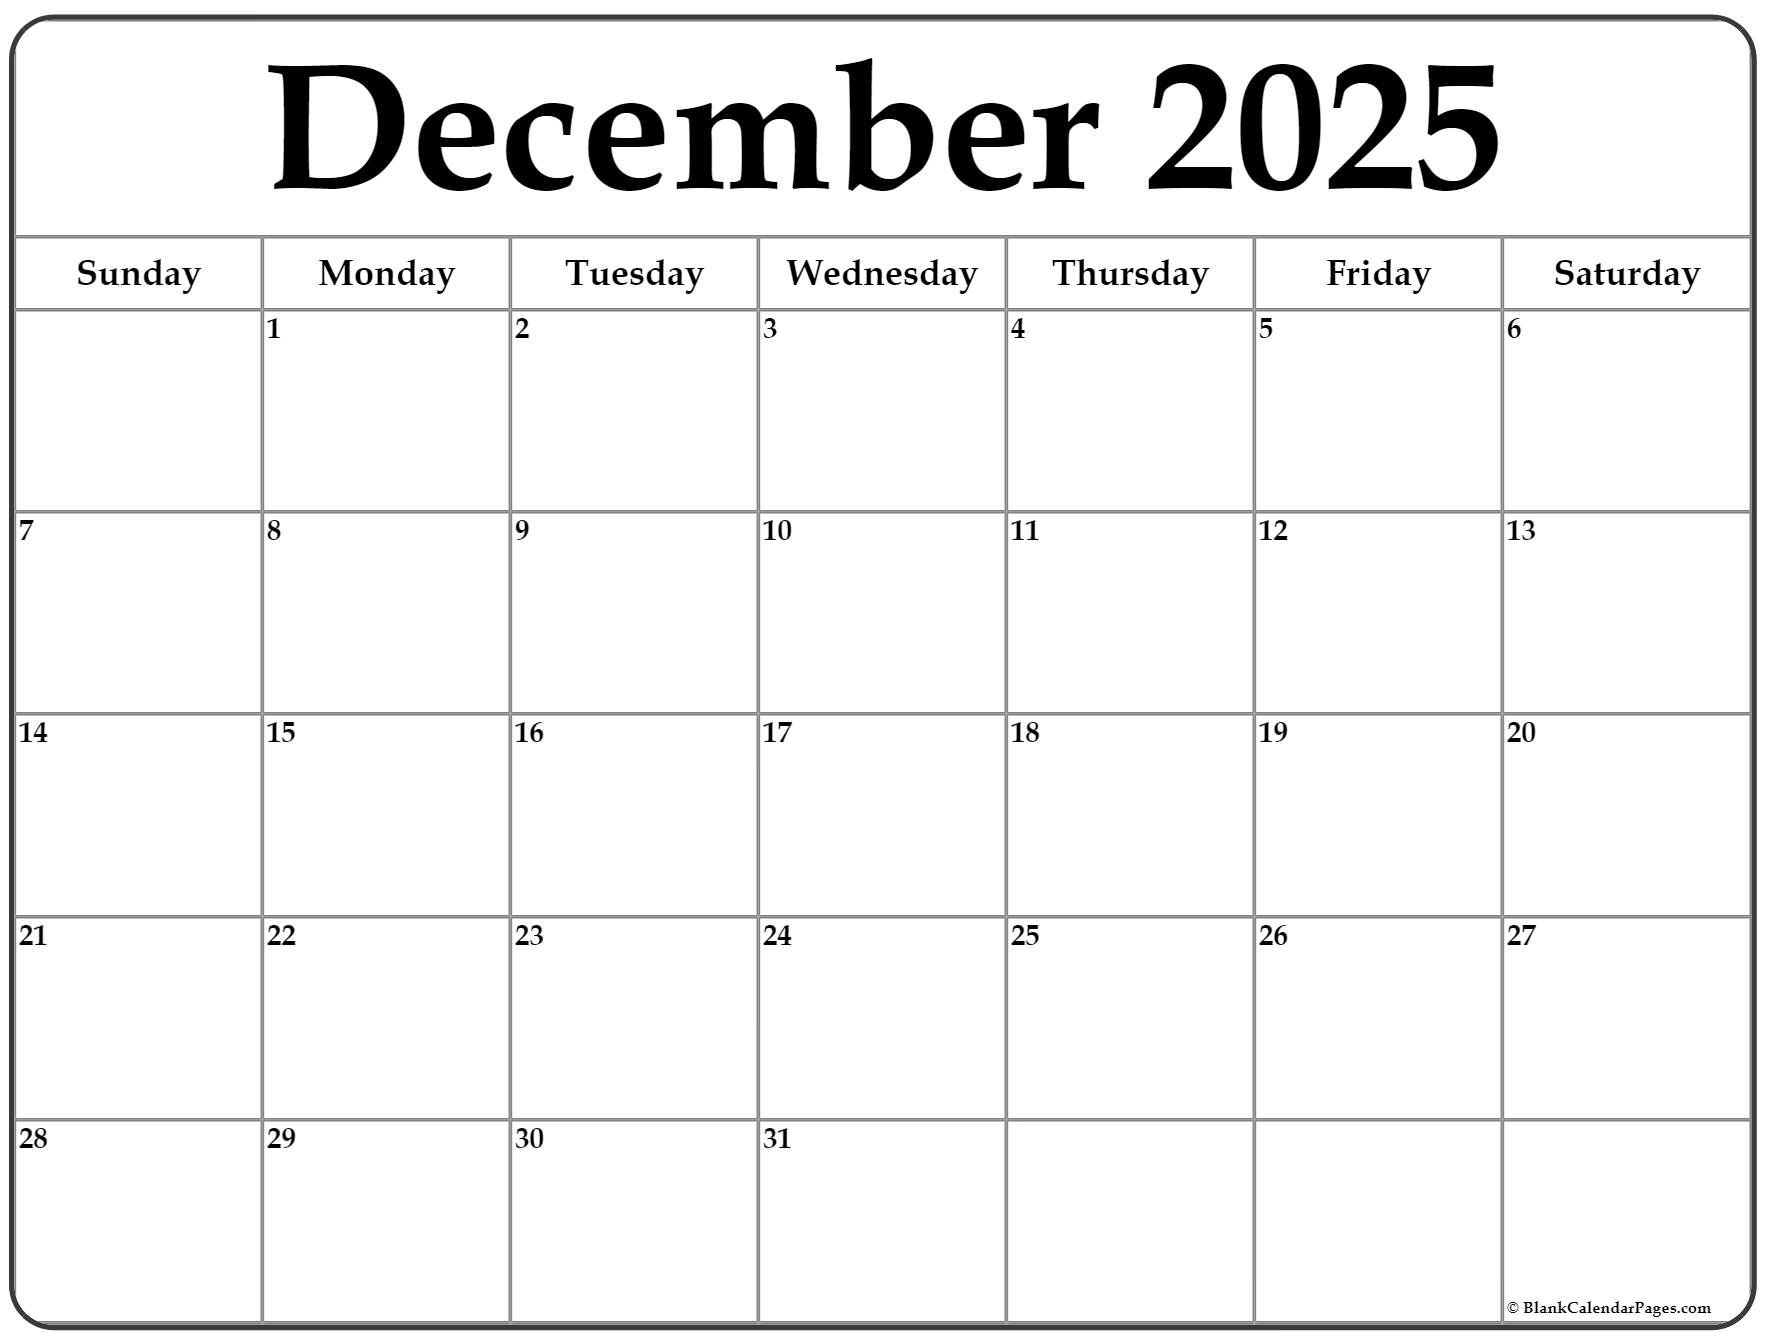 december-2025-calendar-free-printable-calendar